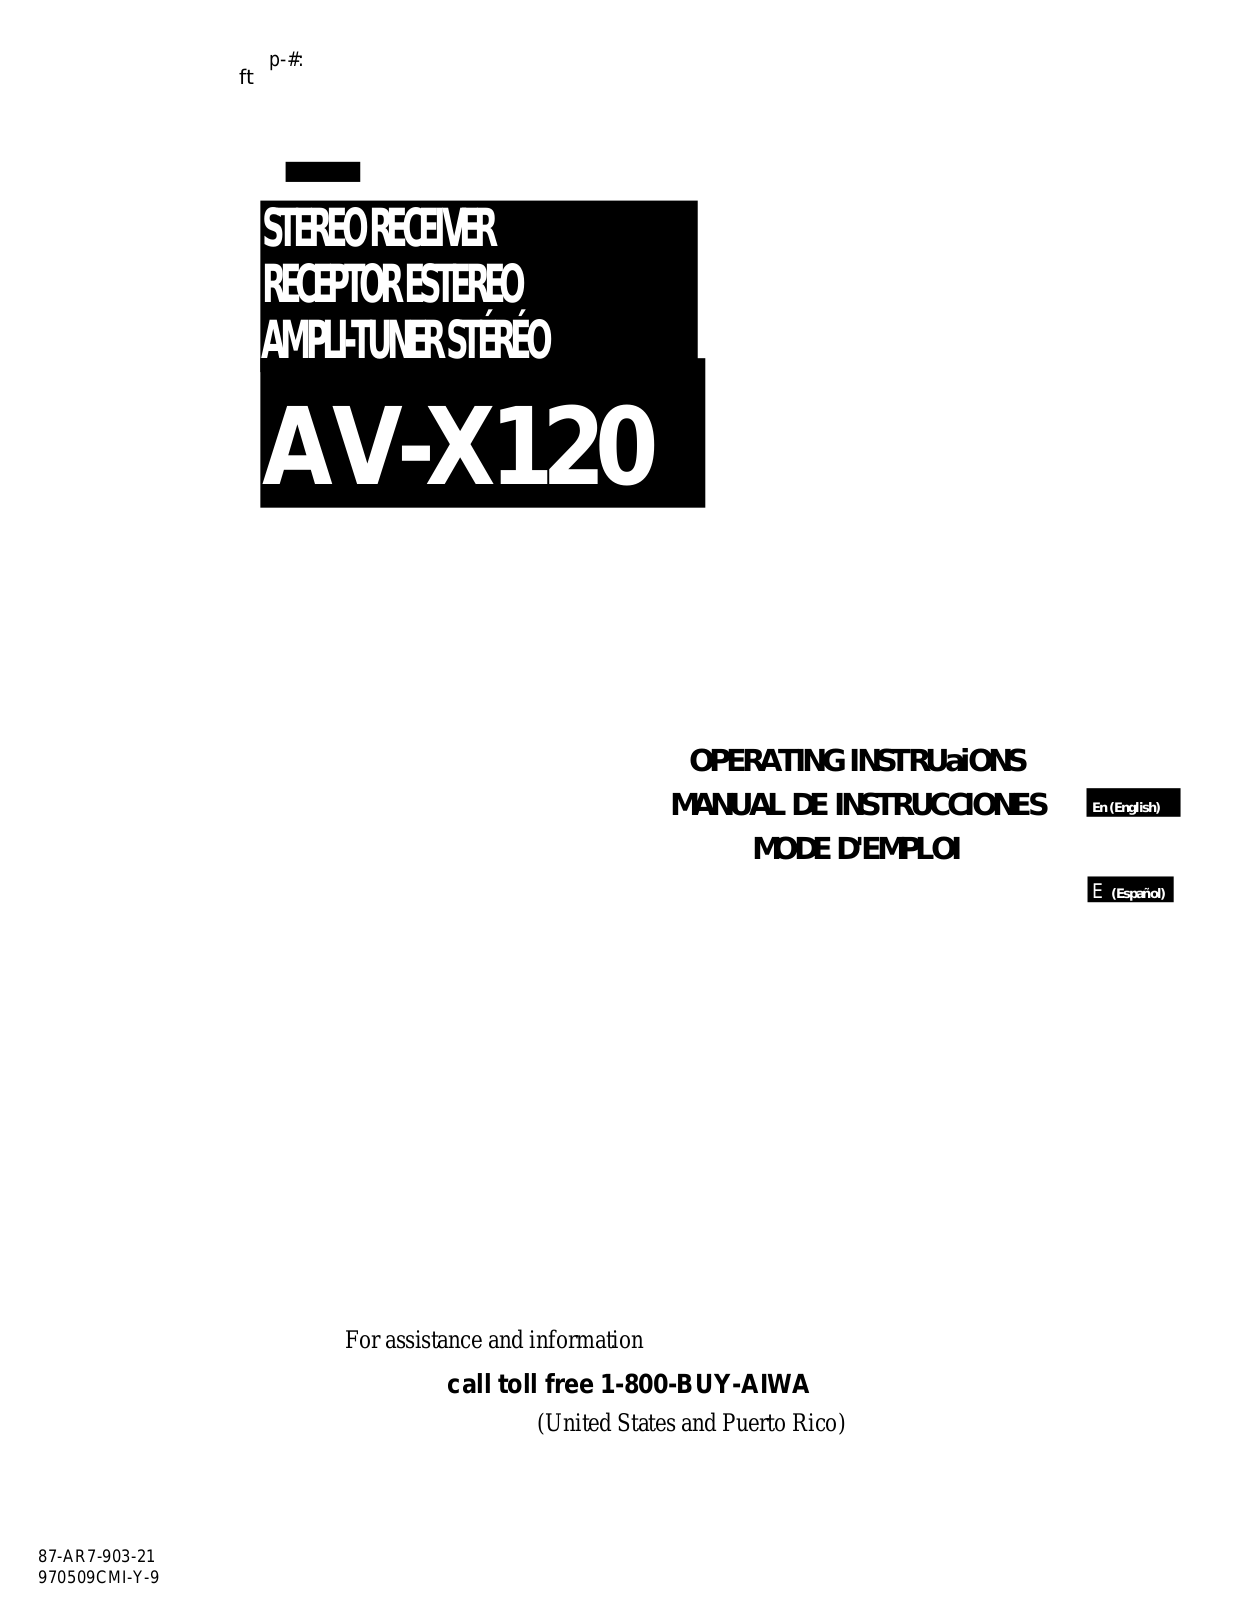 Aiwa AV-X120 User Manual